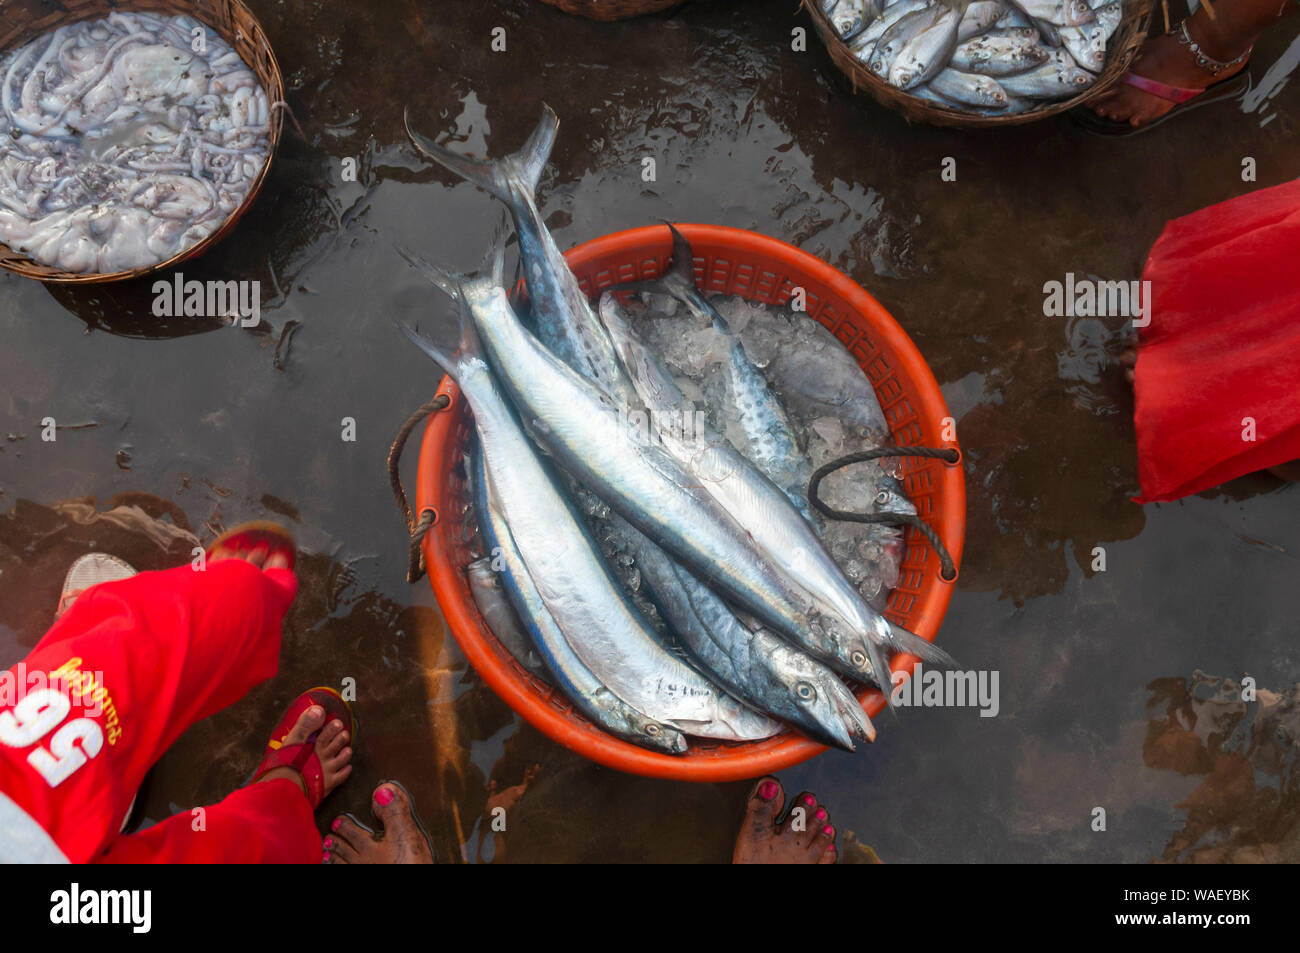 Les prises de poissons frais, Harney Jetty, Ratnagiri, Maharashtra, Inde. Banque D'Images